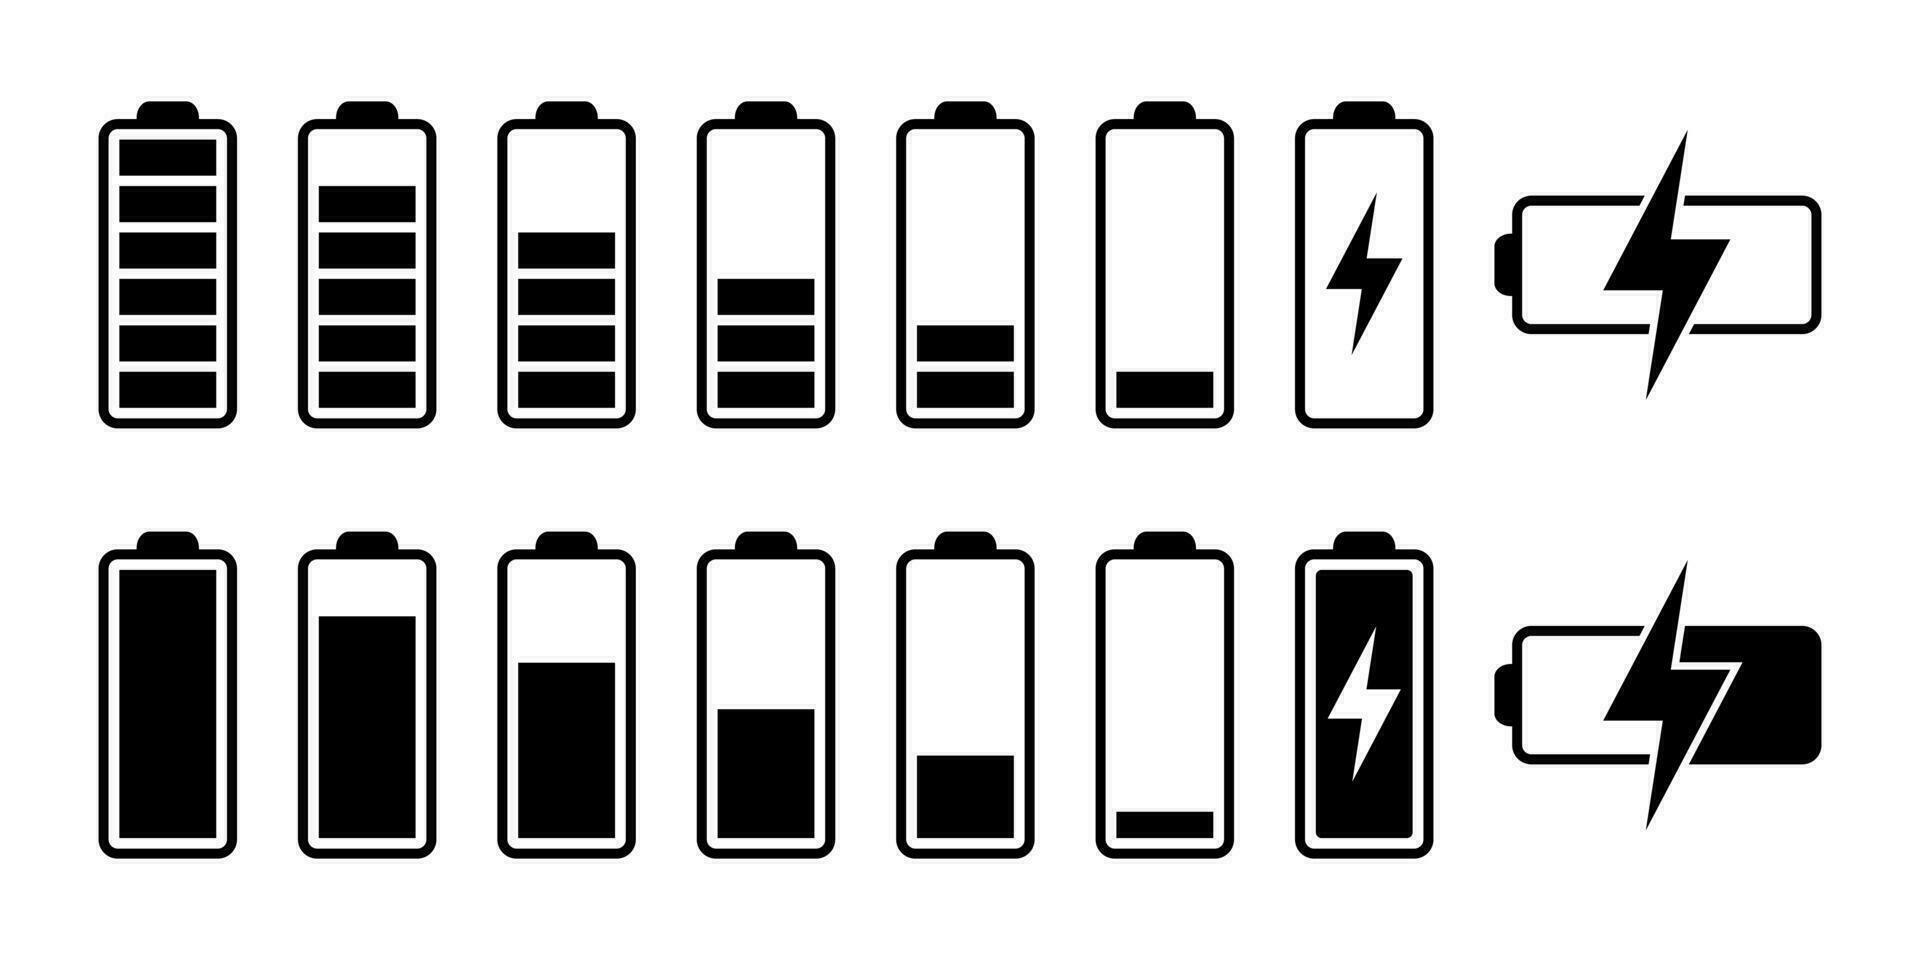 Batterie Laden Symbol. Batterie aufladen Indikator Symbole, Vektor Grafik.